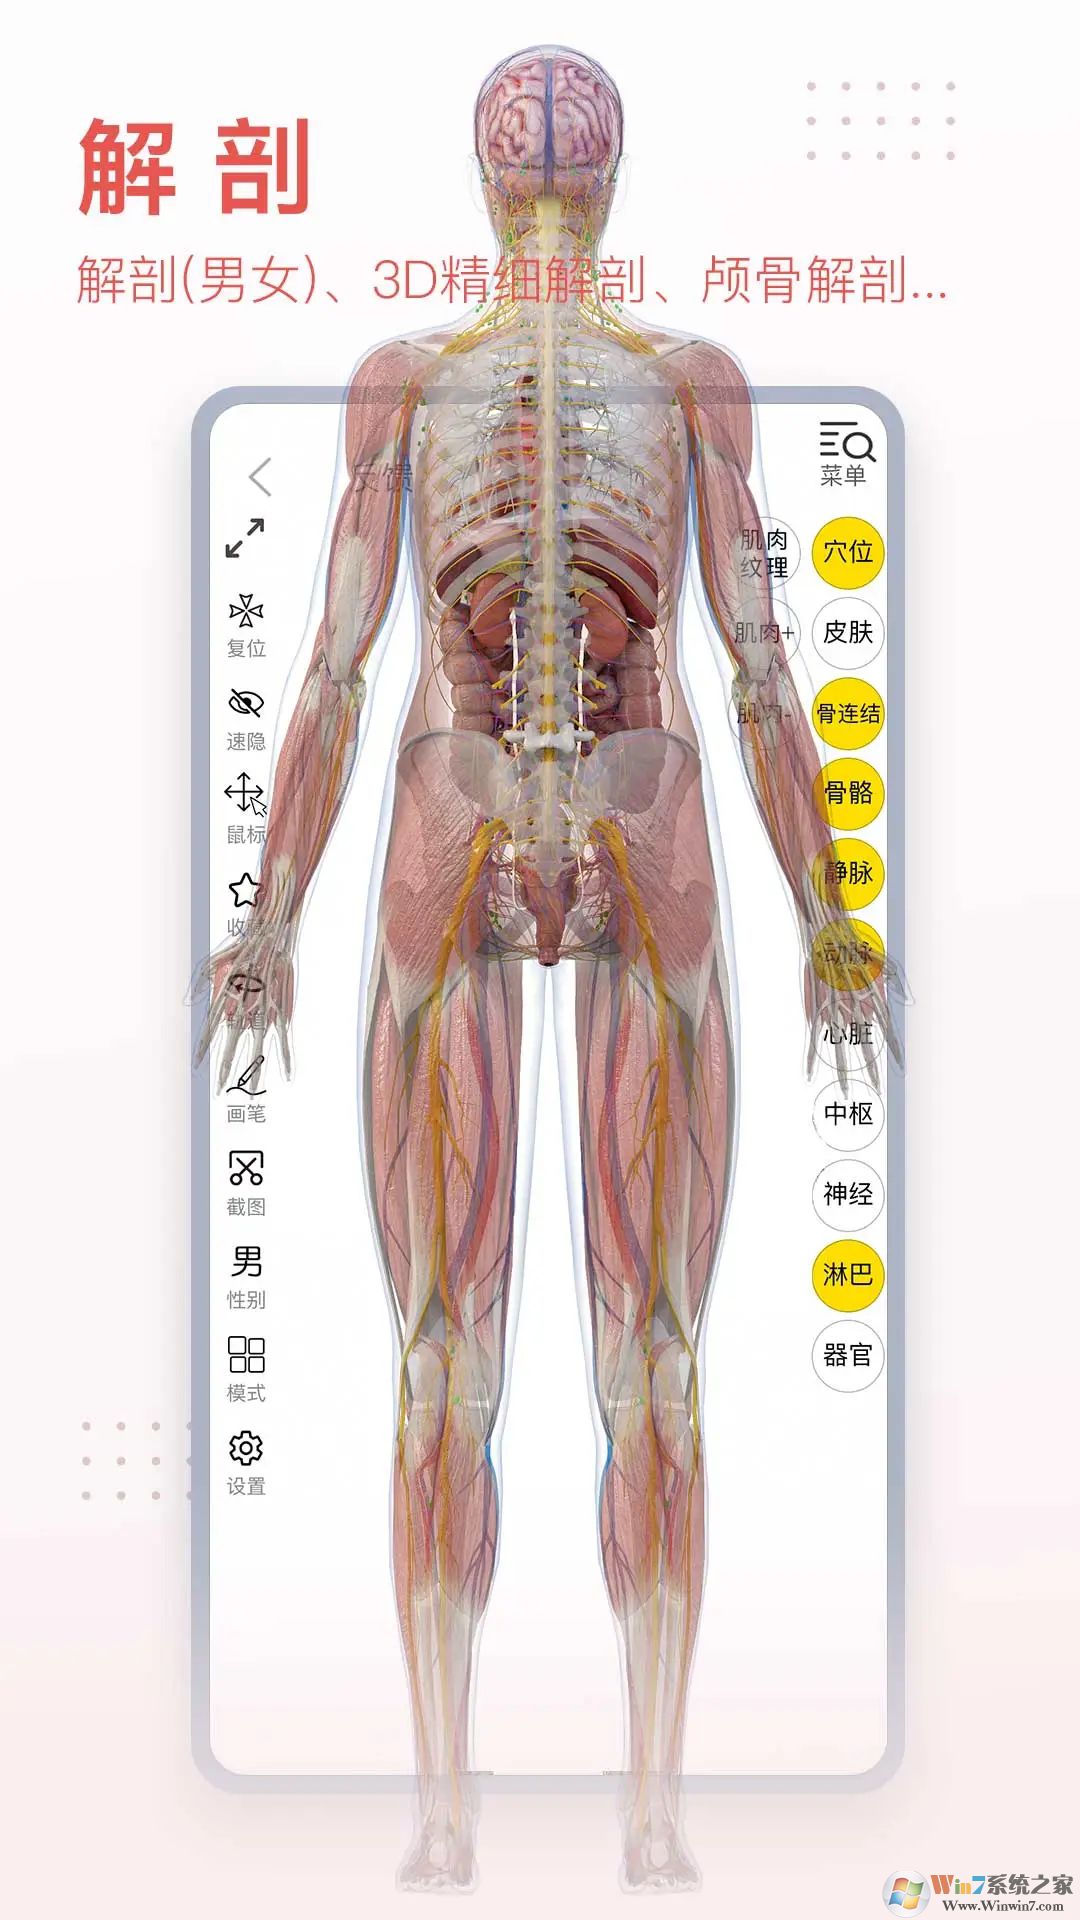 3DBody解剖